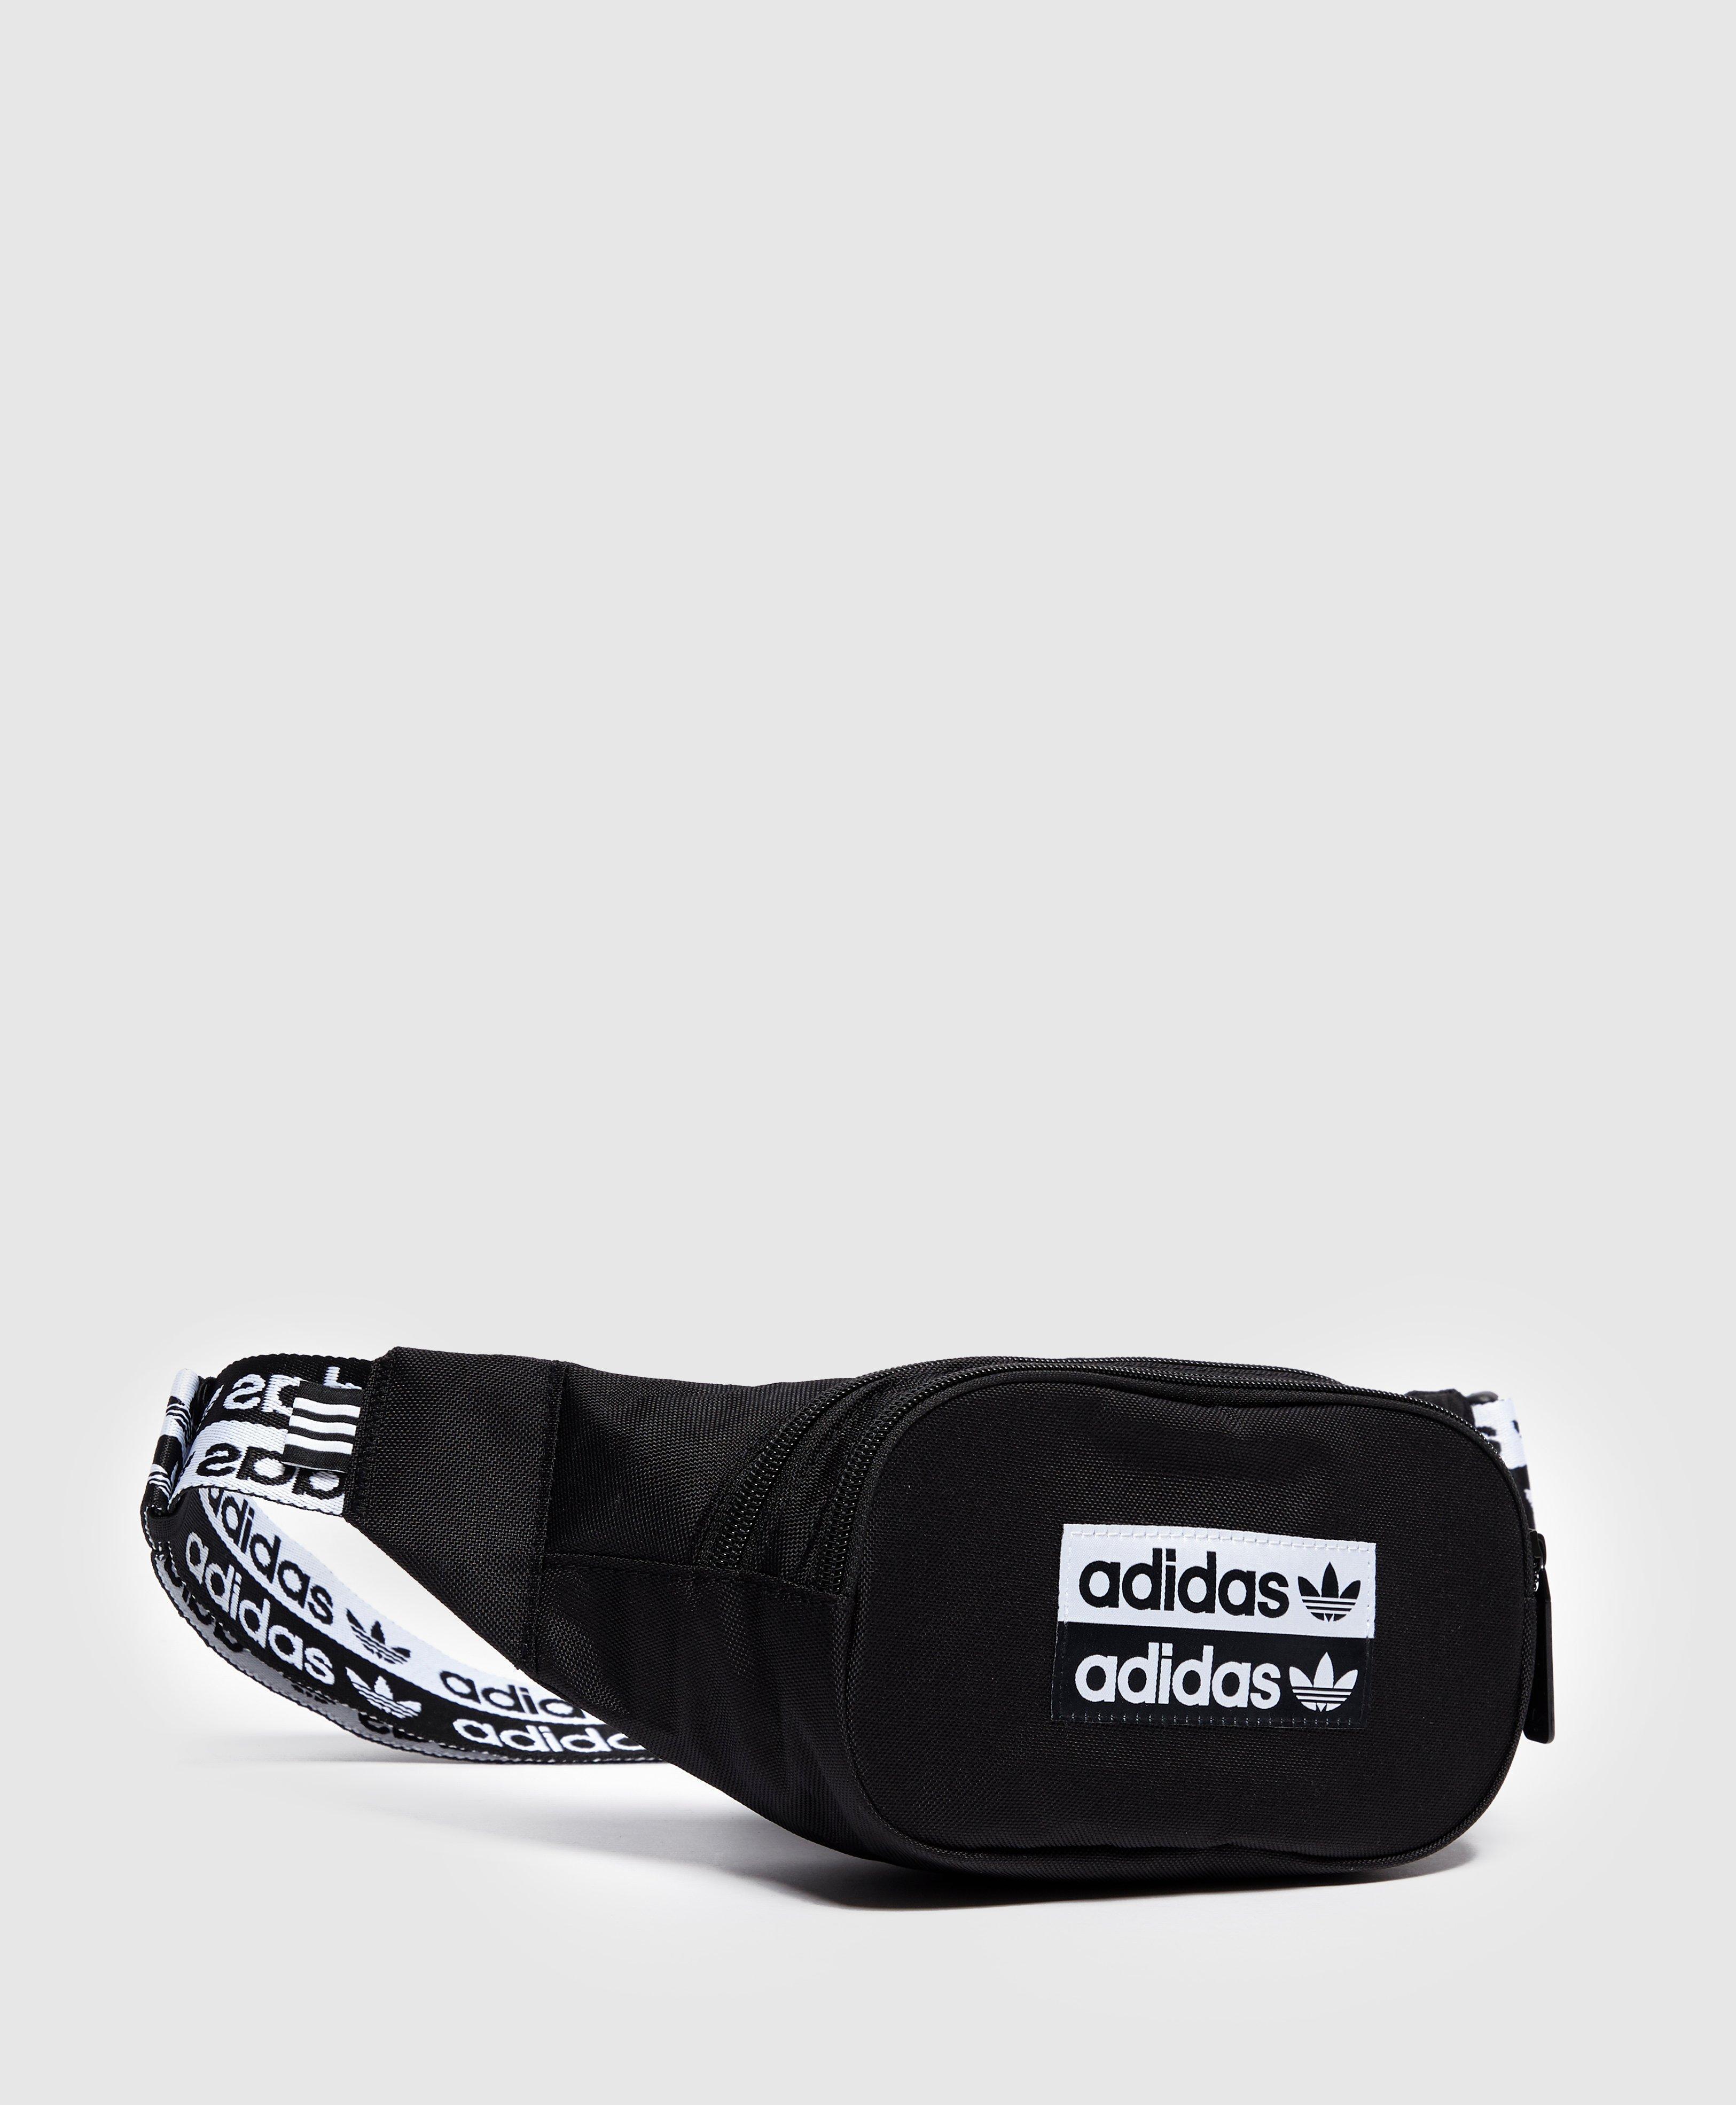 adidas Originals Synthetic R.y.v. Waist Bag in Black for Men - Lyst